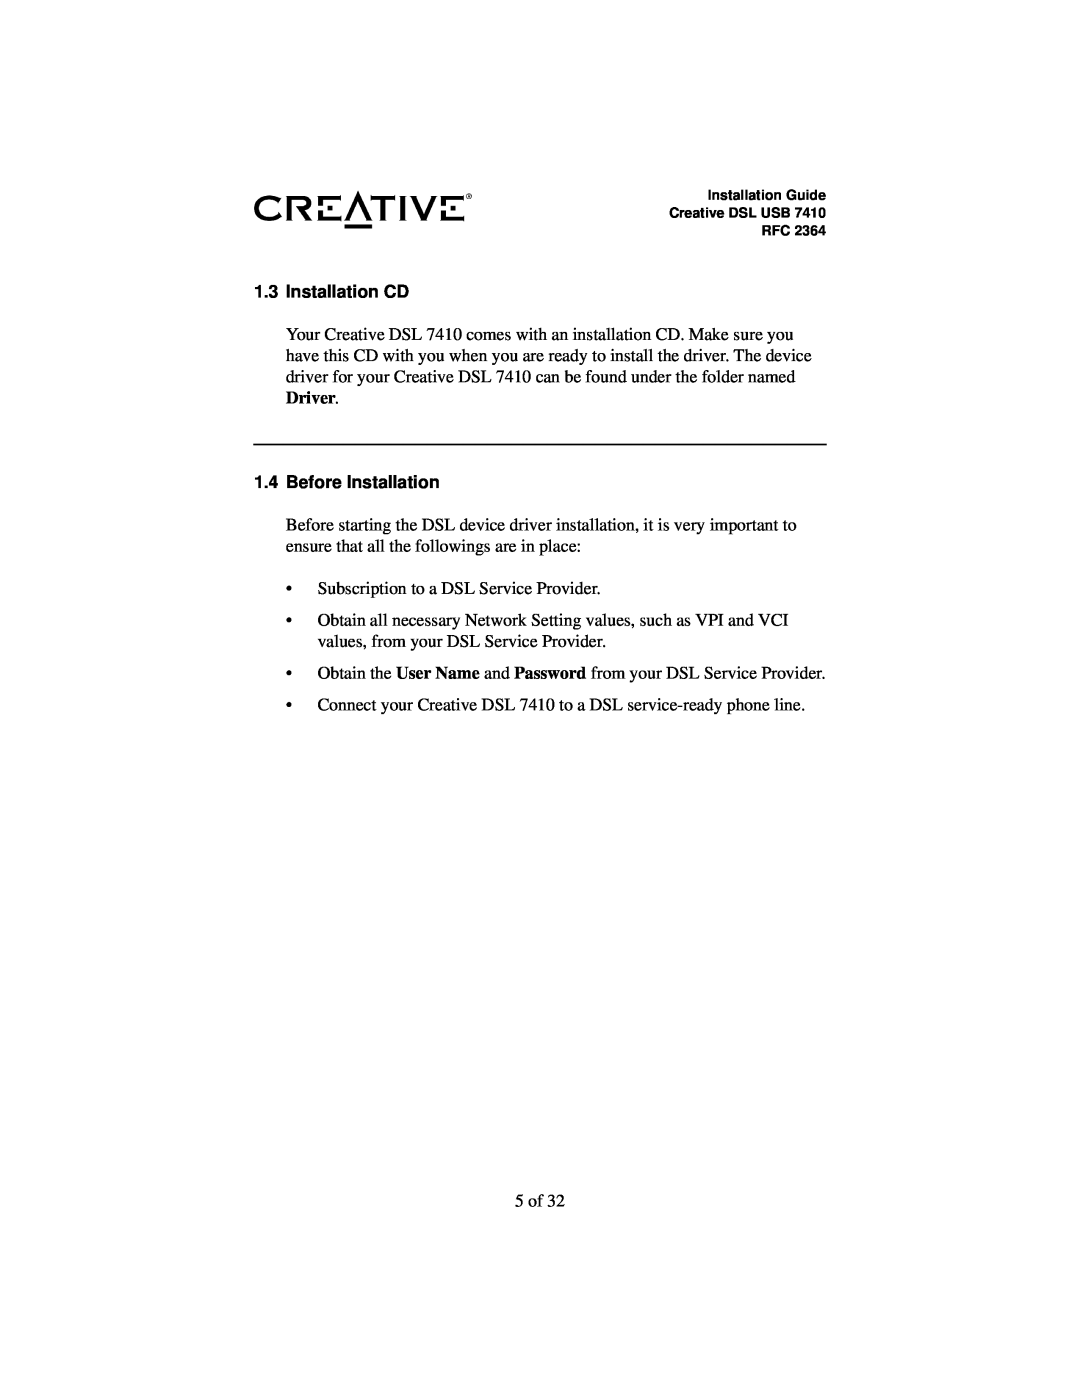 Creative RFC 2364 appendix Installation CD, Before Installation 